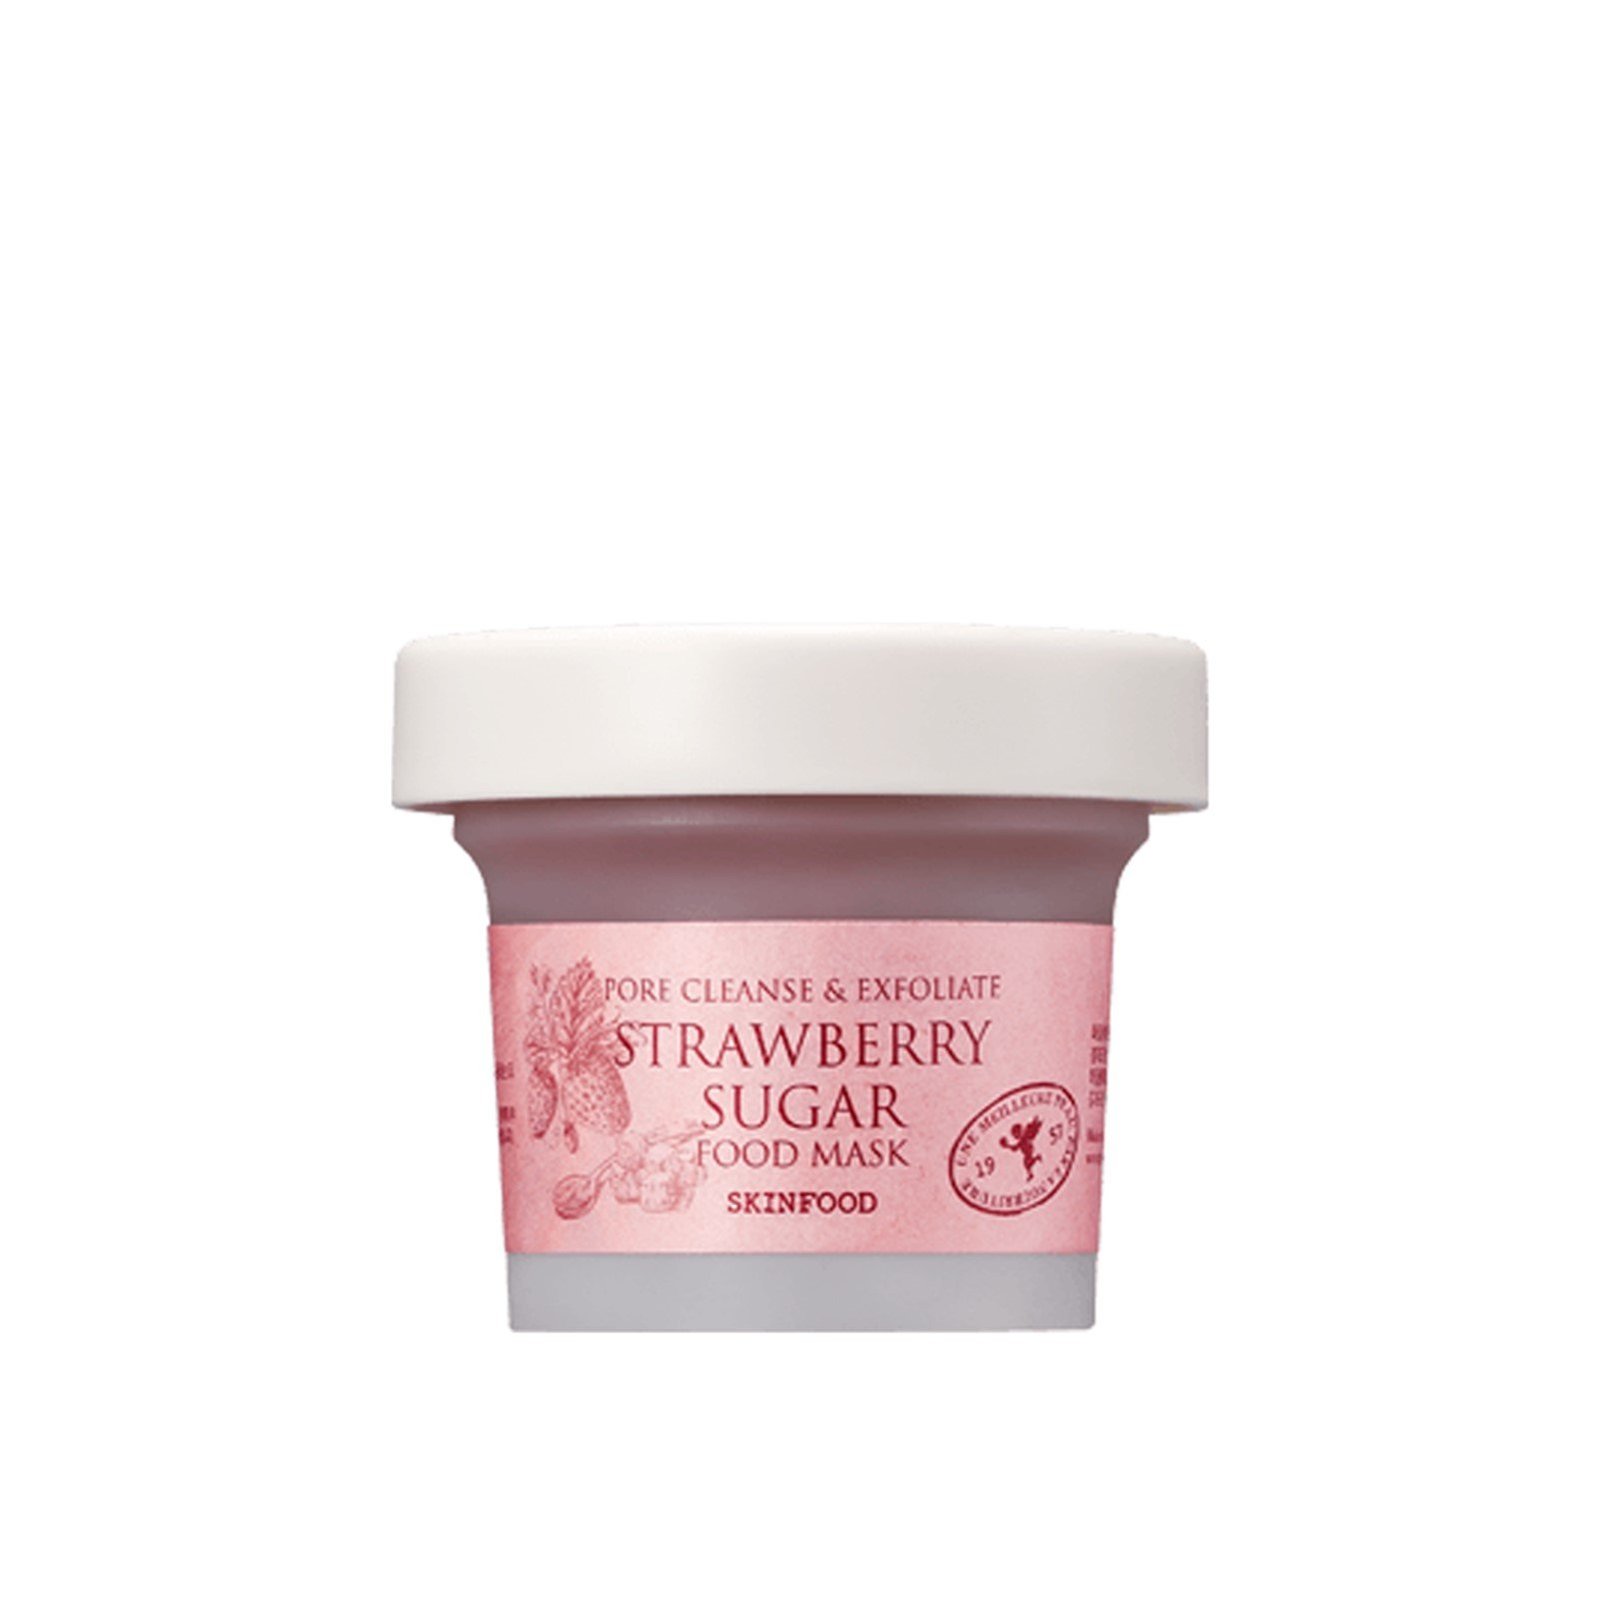 SKINFOOD Strawberry Sugar Food Mask 120g (4.23 oz)